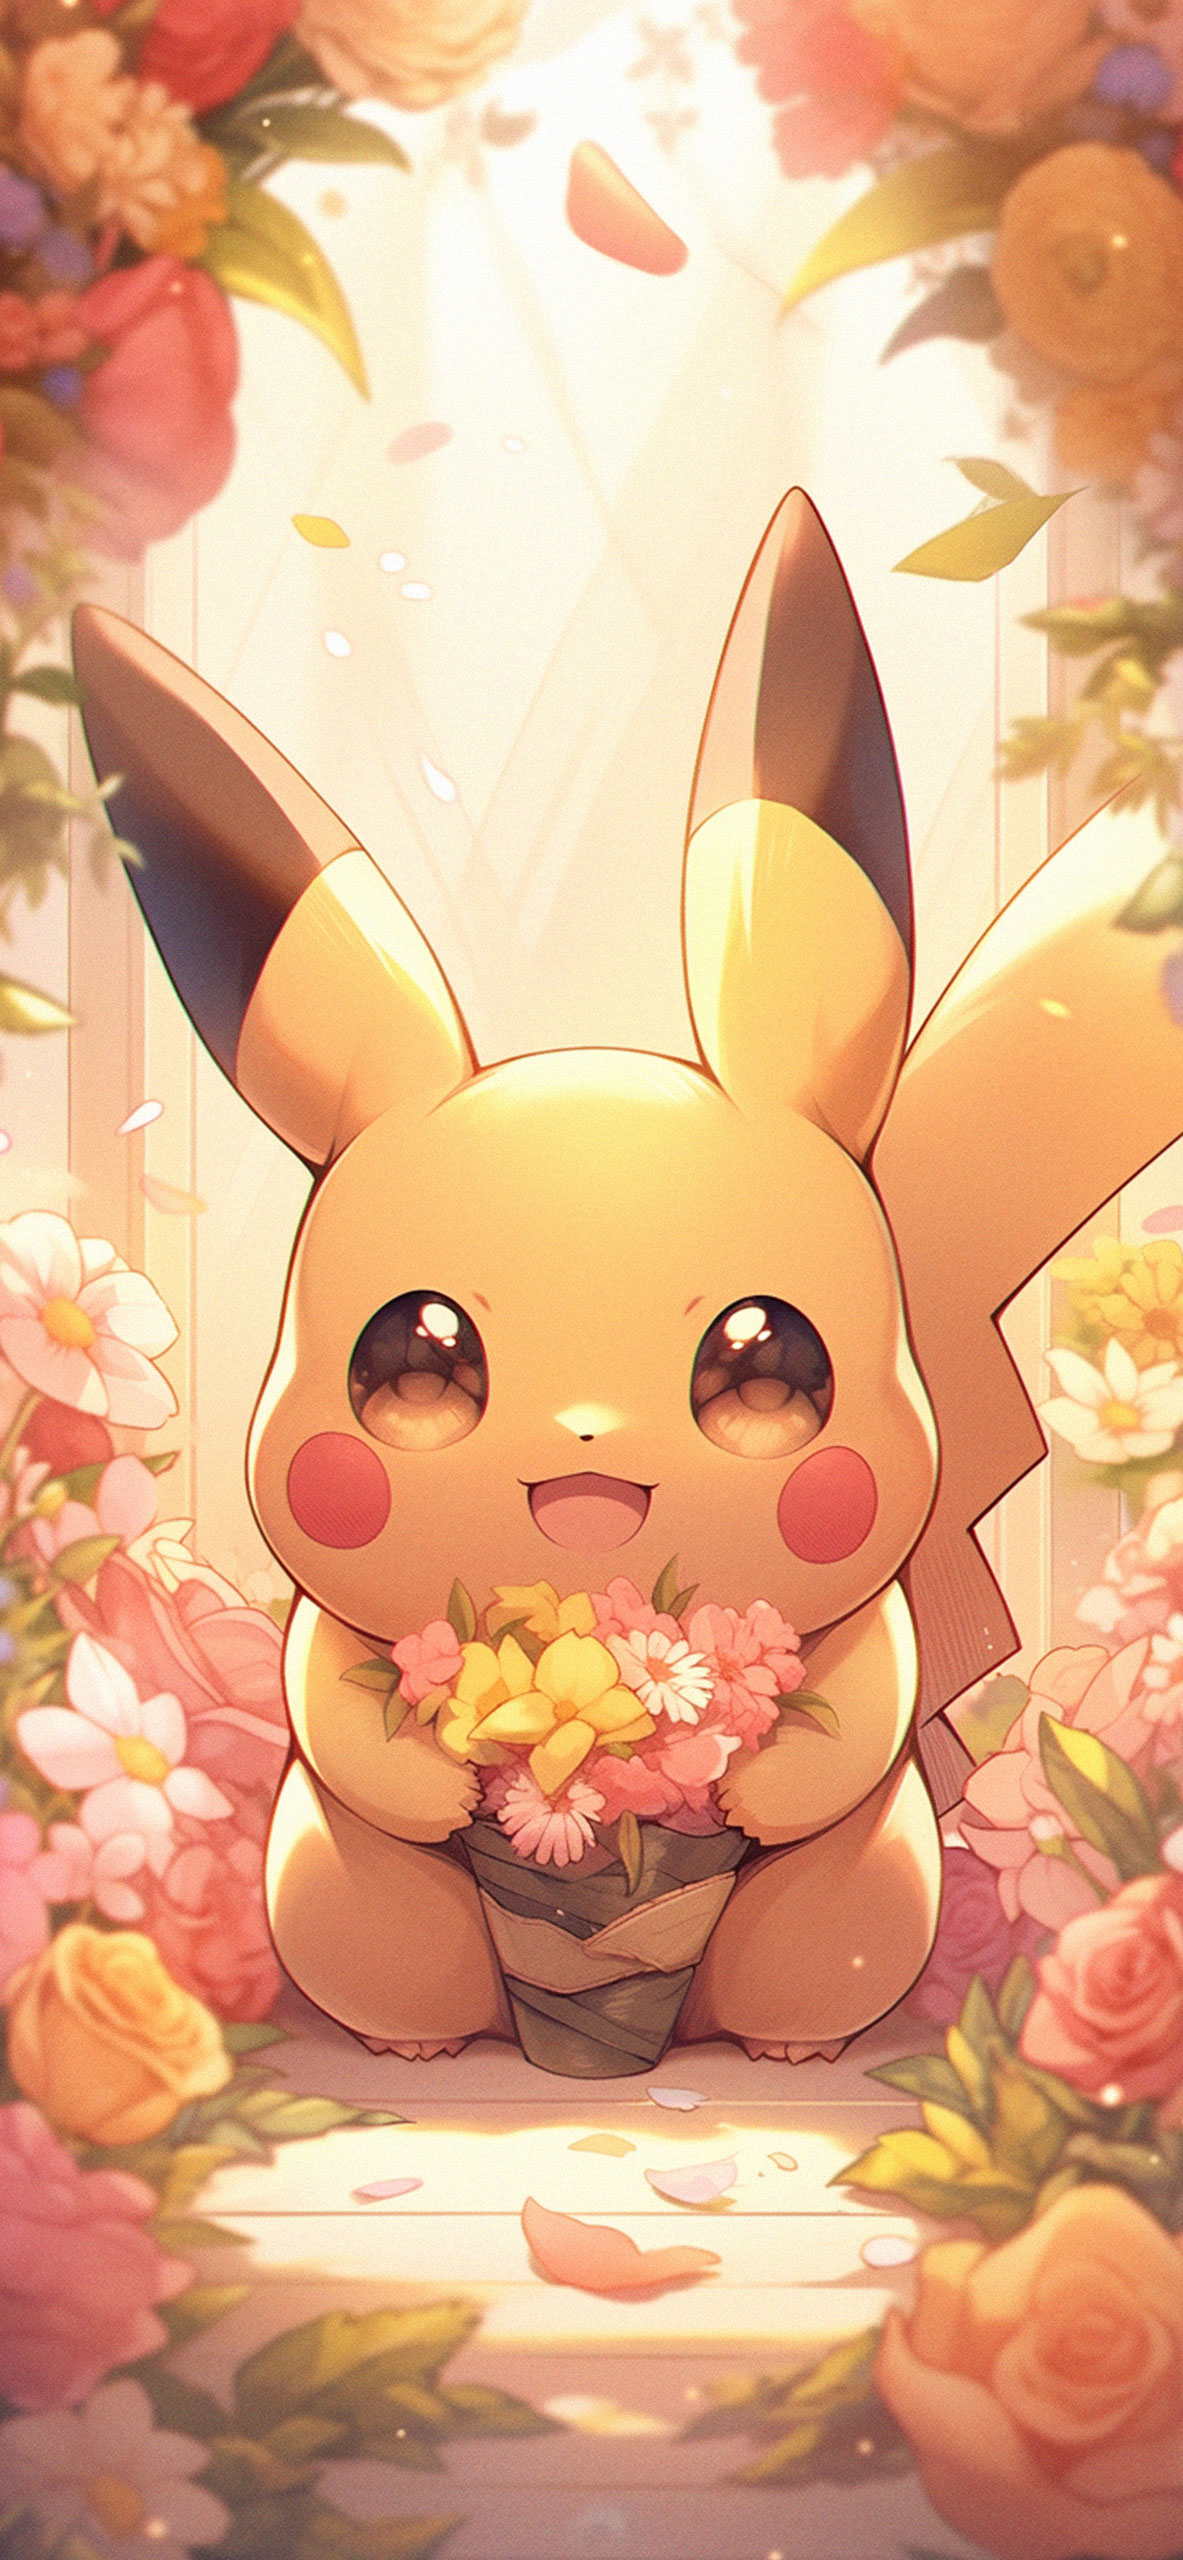 Pikachu cute wallpaper